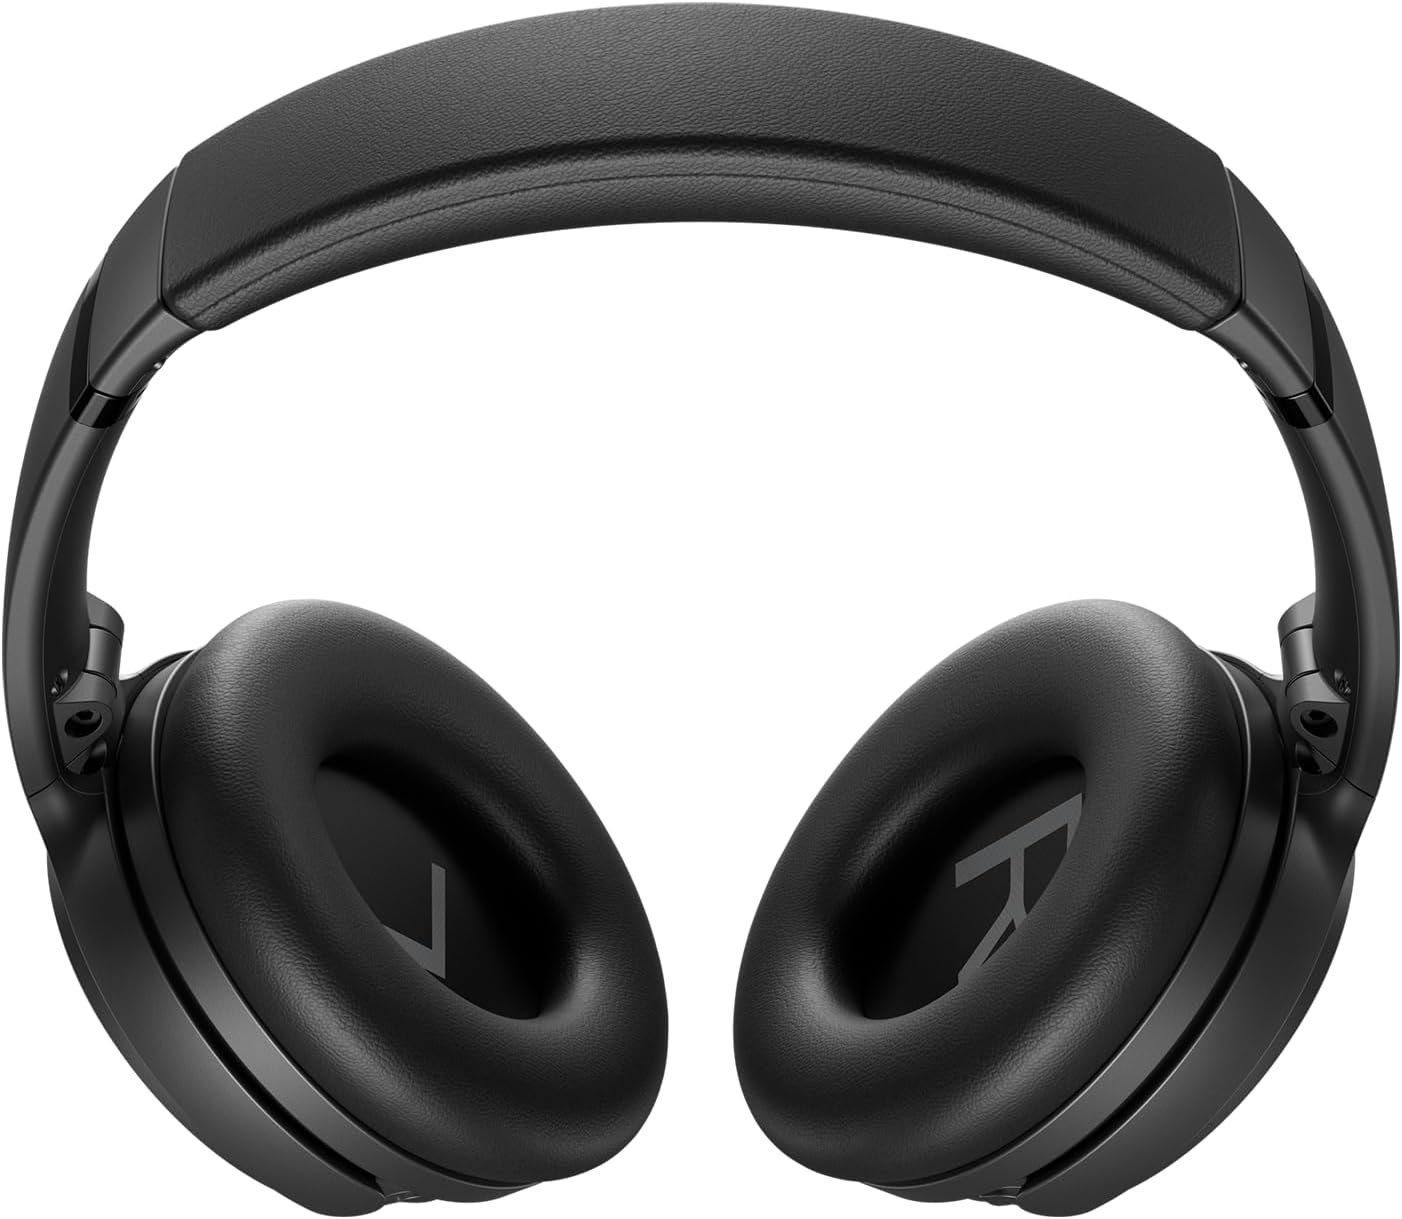 Kopfhörer Black Noise-Cancelling, mit Bluetooth mit (Nahtlose Bluetooth, Over-Ear-Kopfhörer) Verbindung Geräten, Shark bevorzugten Gaming-Headset Kabellose